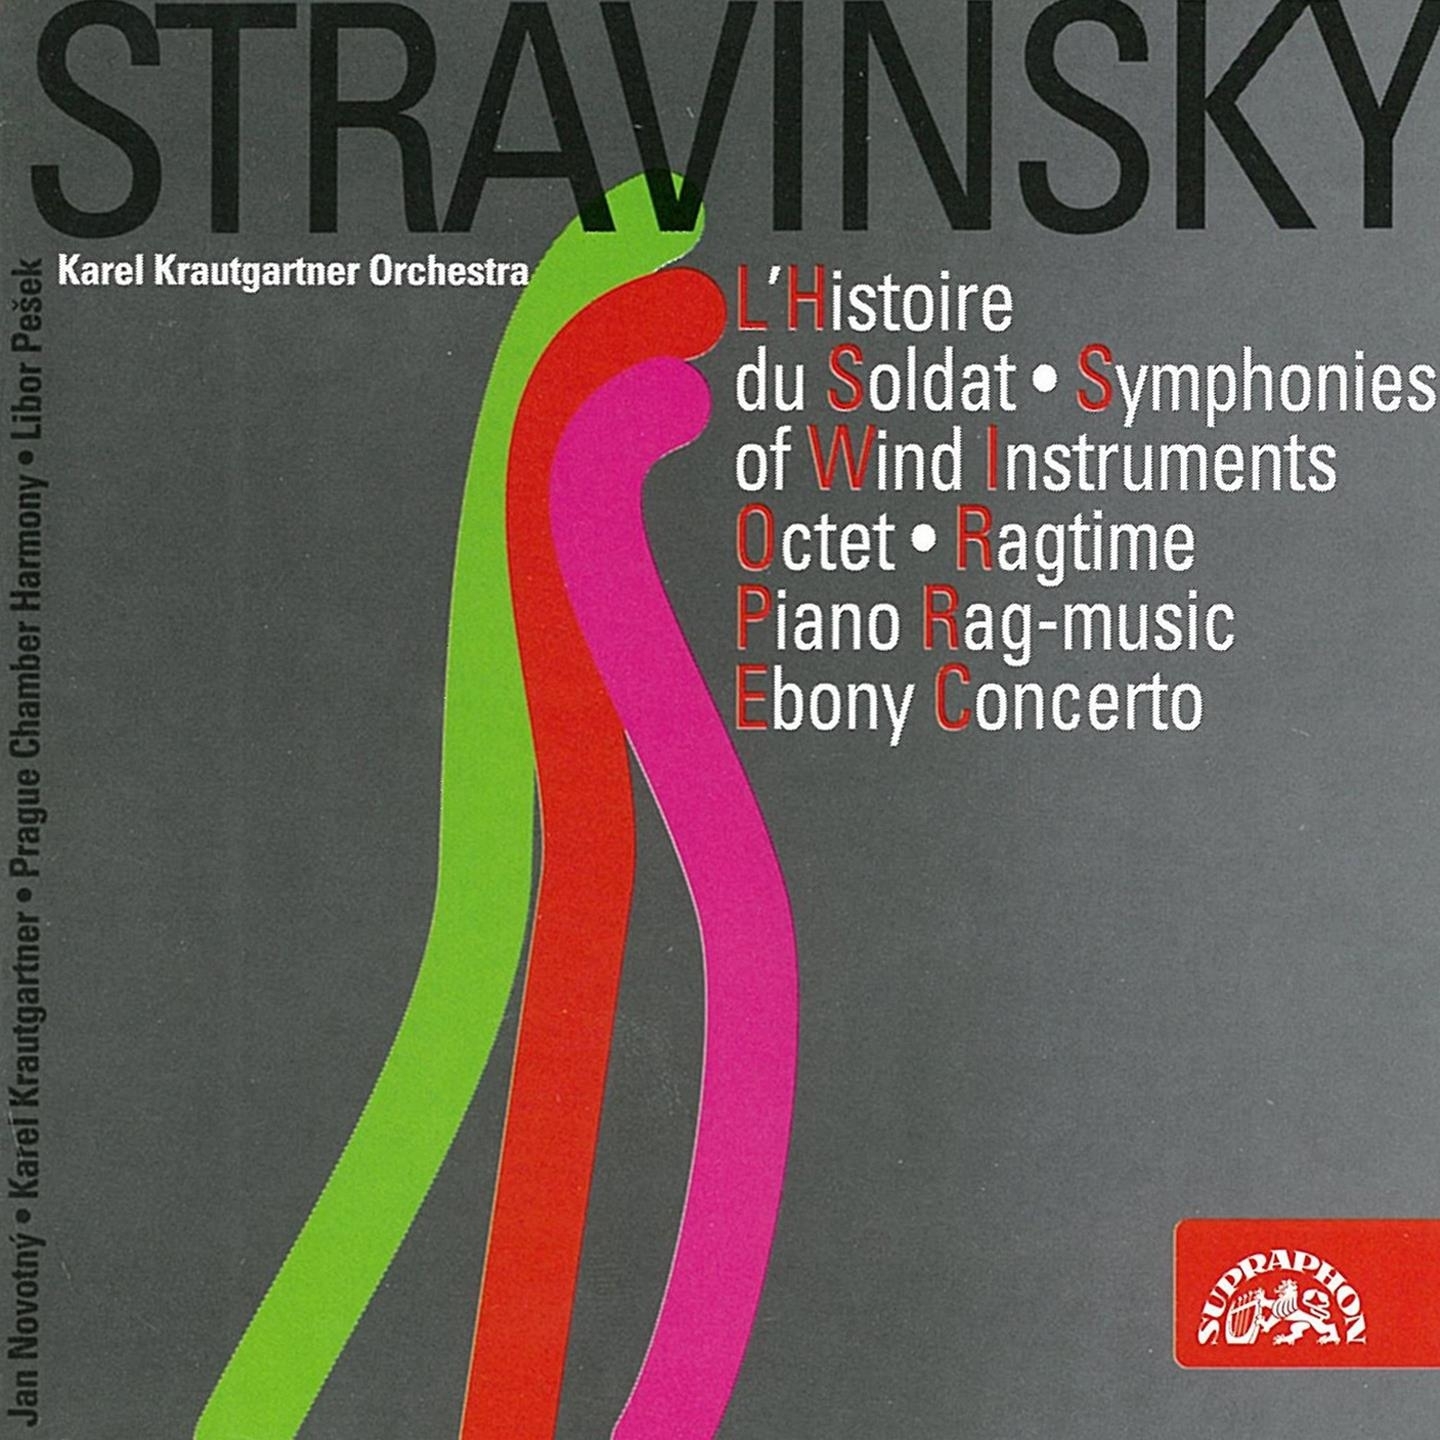 Stravinsky: L Histoire du Soldat, Symphonies of Wind Instruments, Piano Ragmusic...